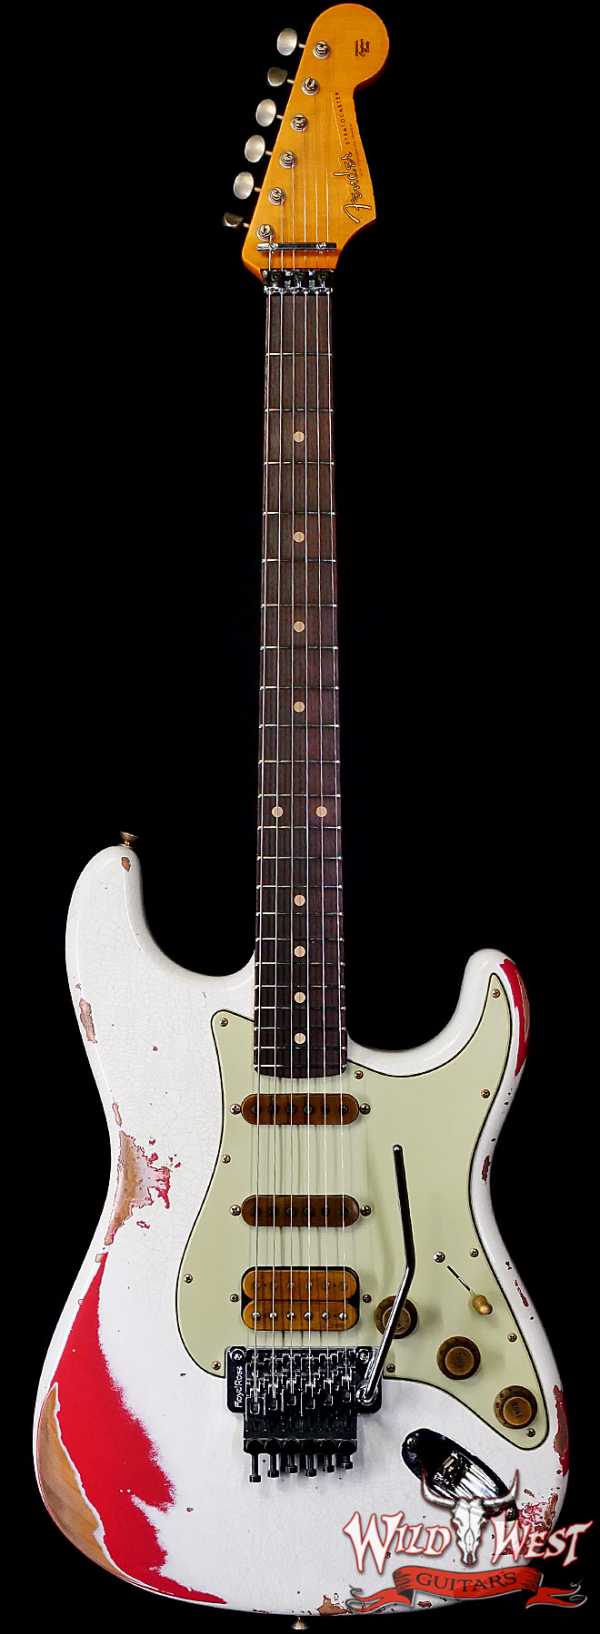 Fender Custom Shop Wild West White Lightning Stratocaster HSS Floyd Rose Rosewood Board 22 Frets Heavy Relic Fiesta Red 7.95 LBS